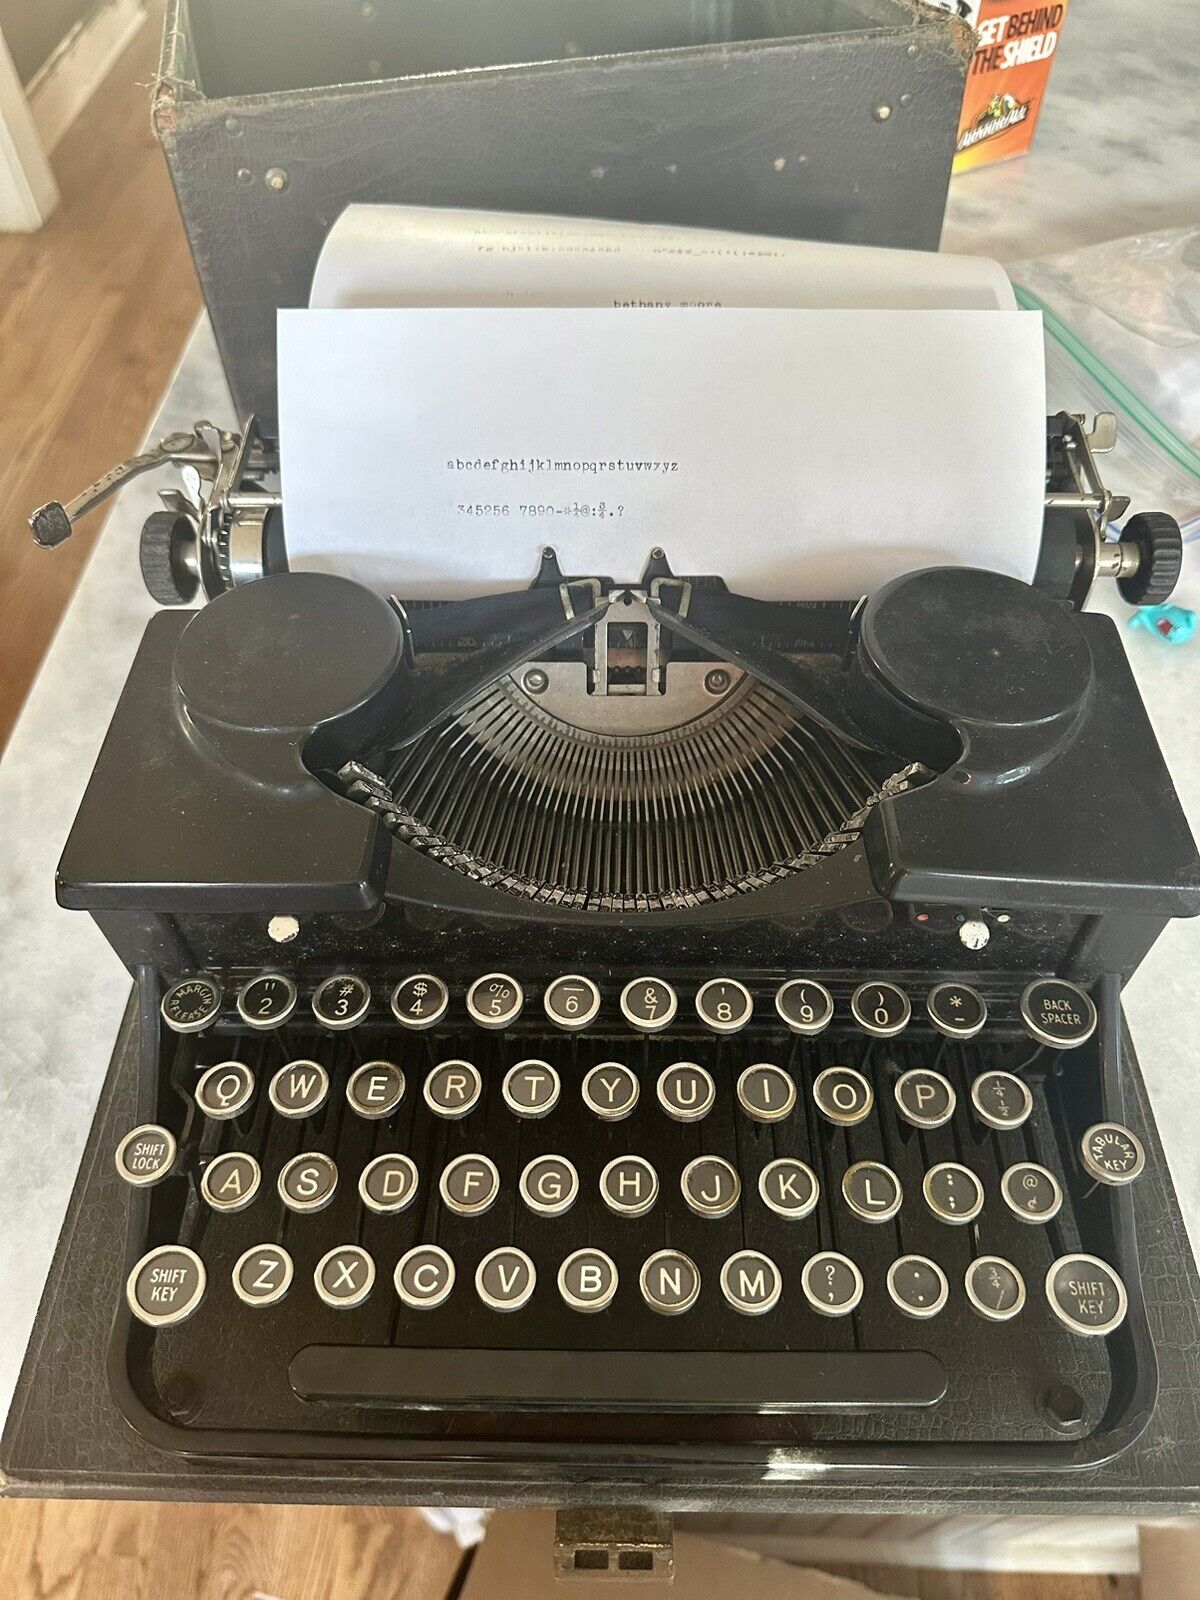 Antique Royal Model P Typewriter w/ Case Serial Number P232200, Built in 1930